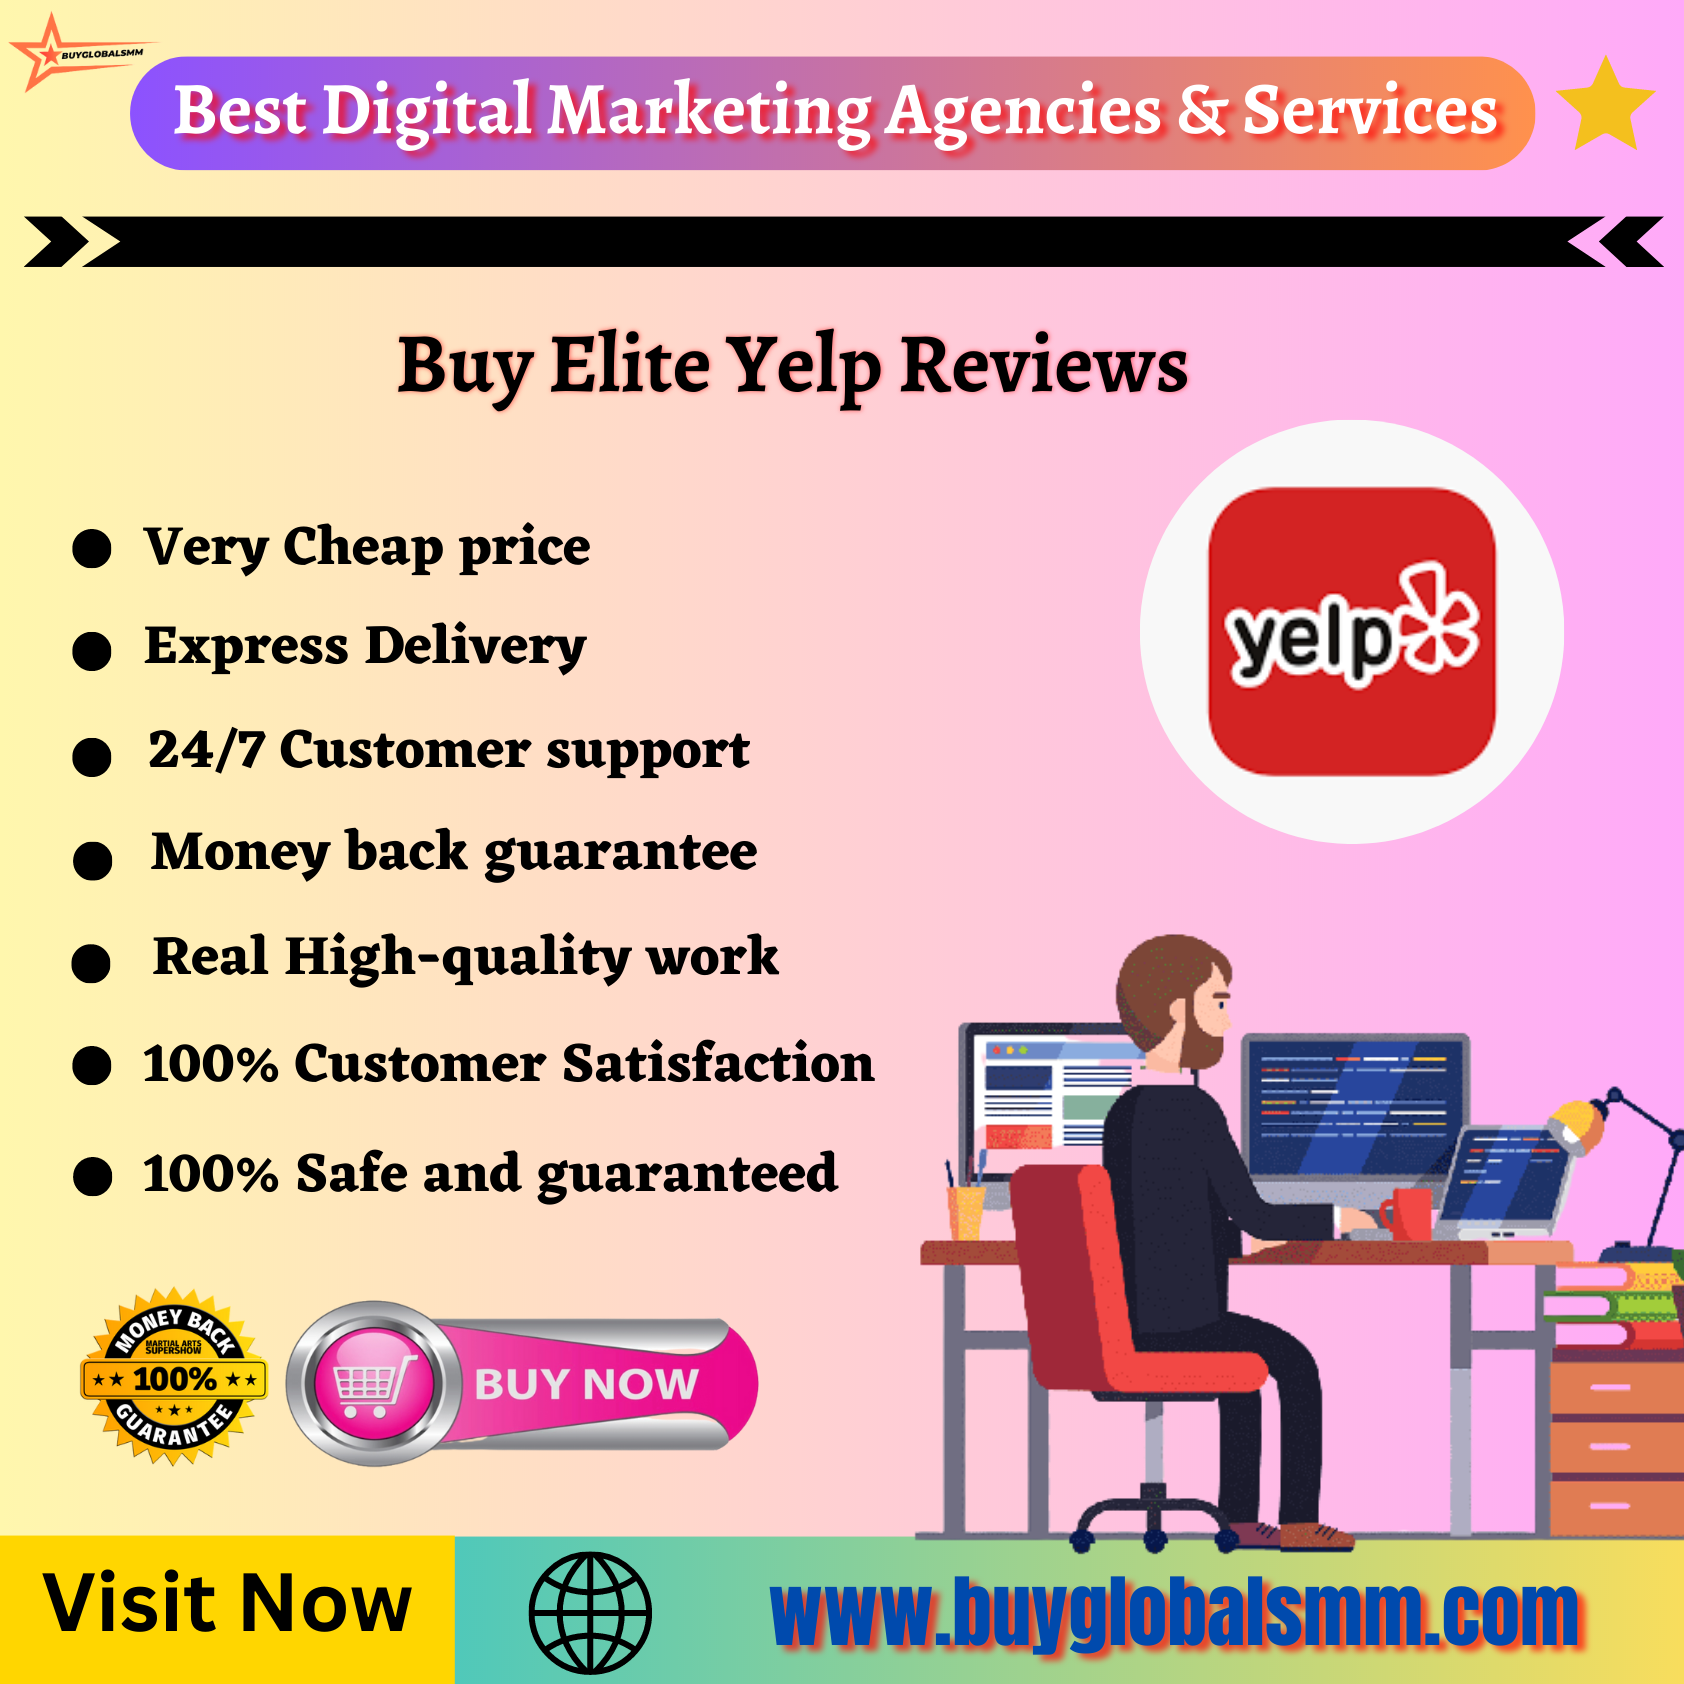 Buy Elite Yelp Reviews-100% best, & permanent reviews...